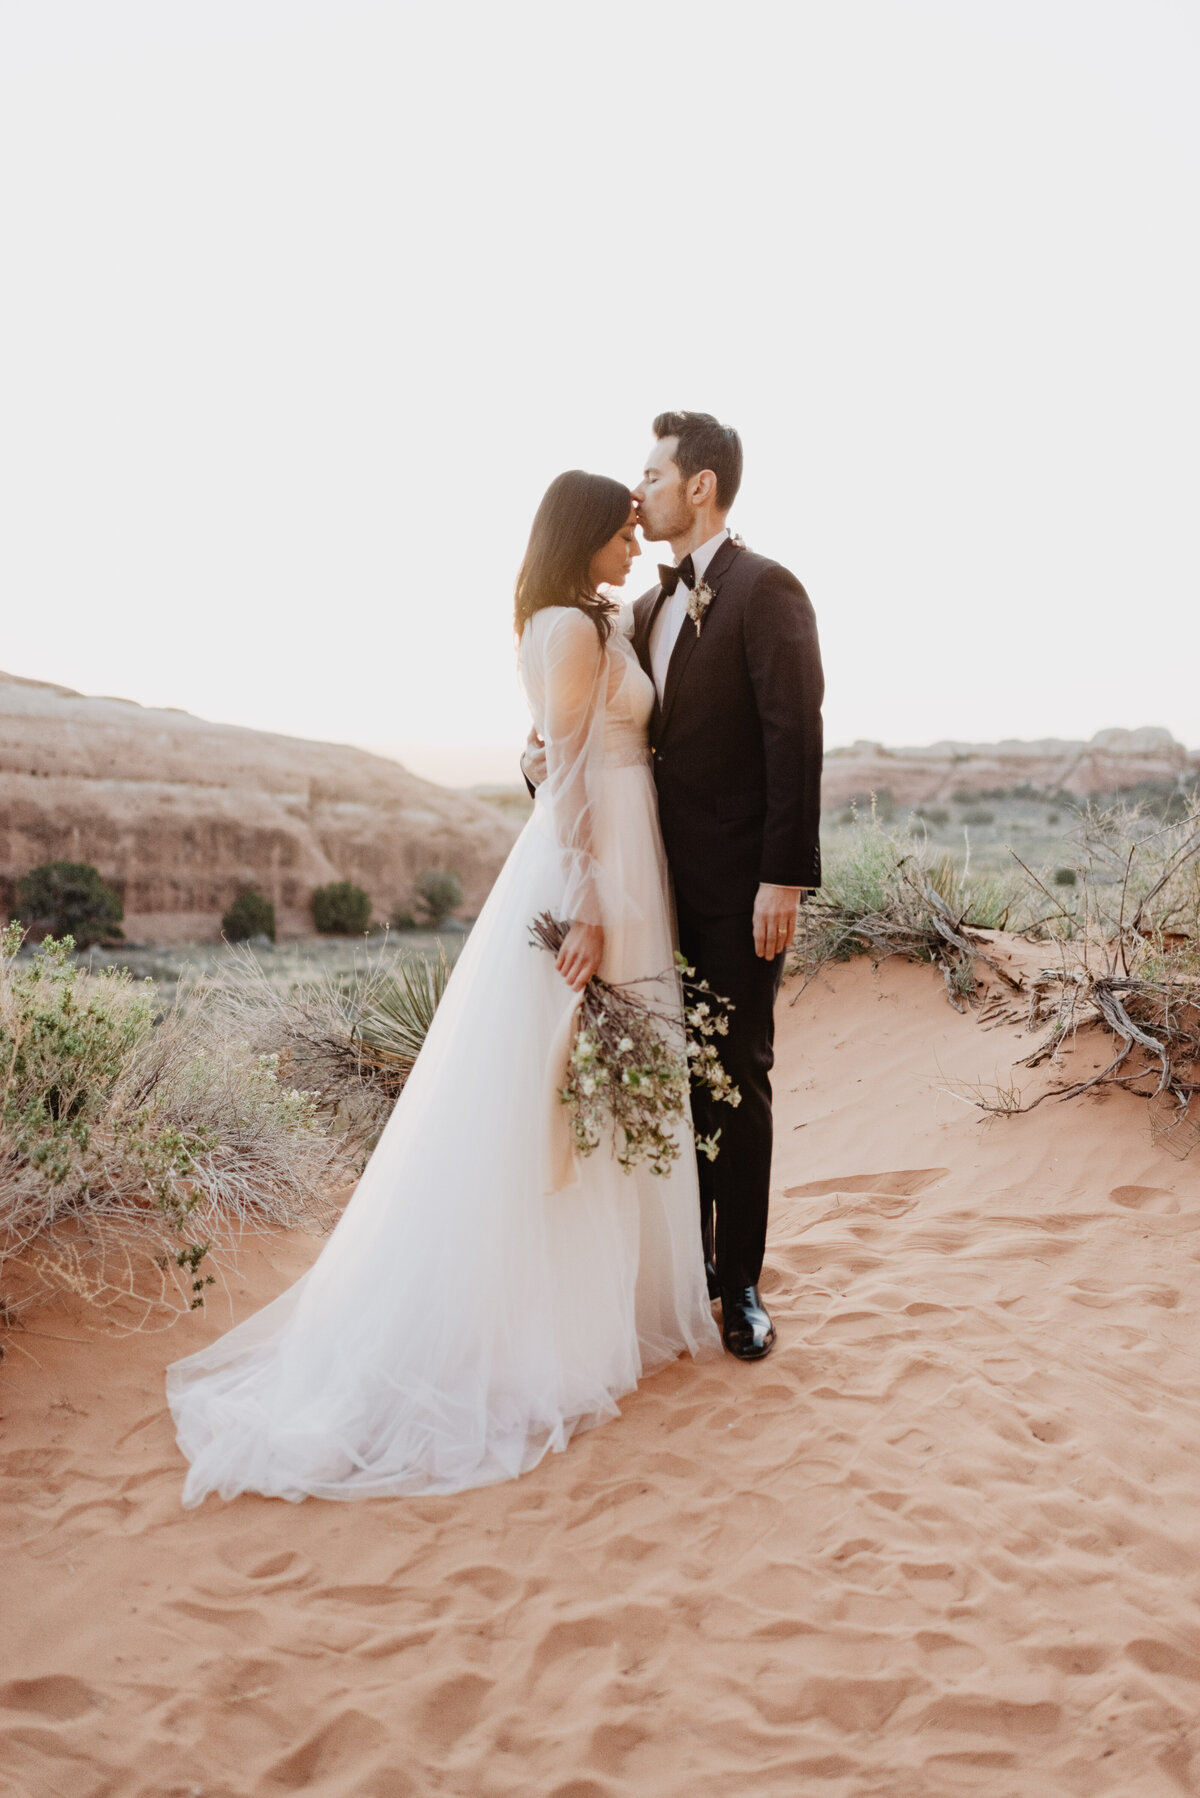 Utah elopement photographer captures groom kissing bride's forehead